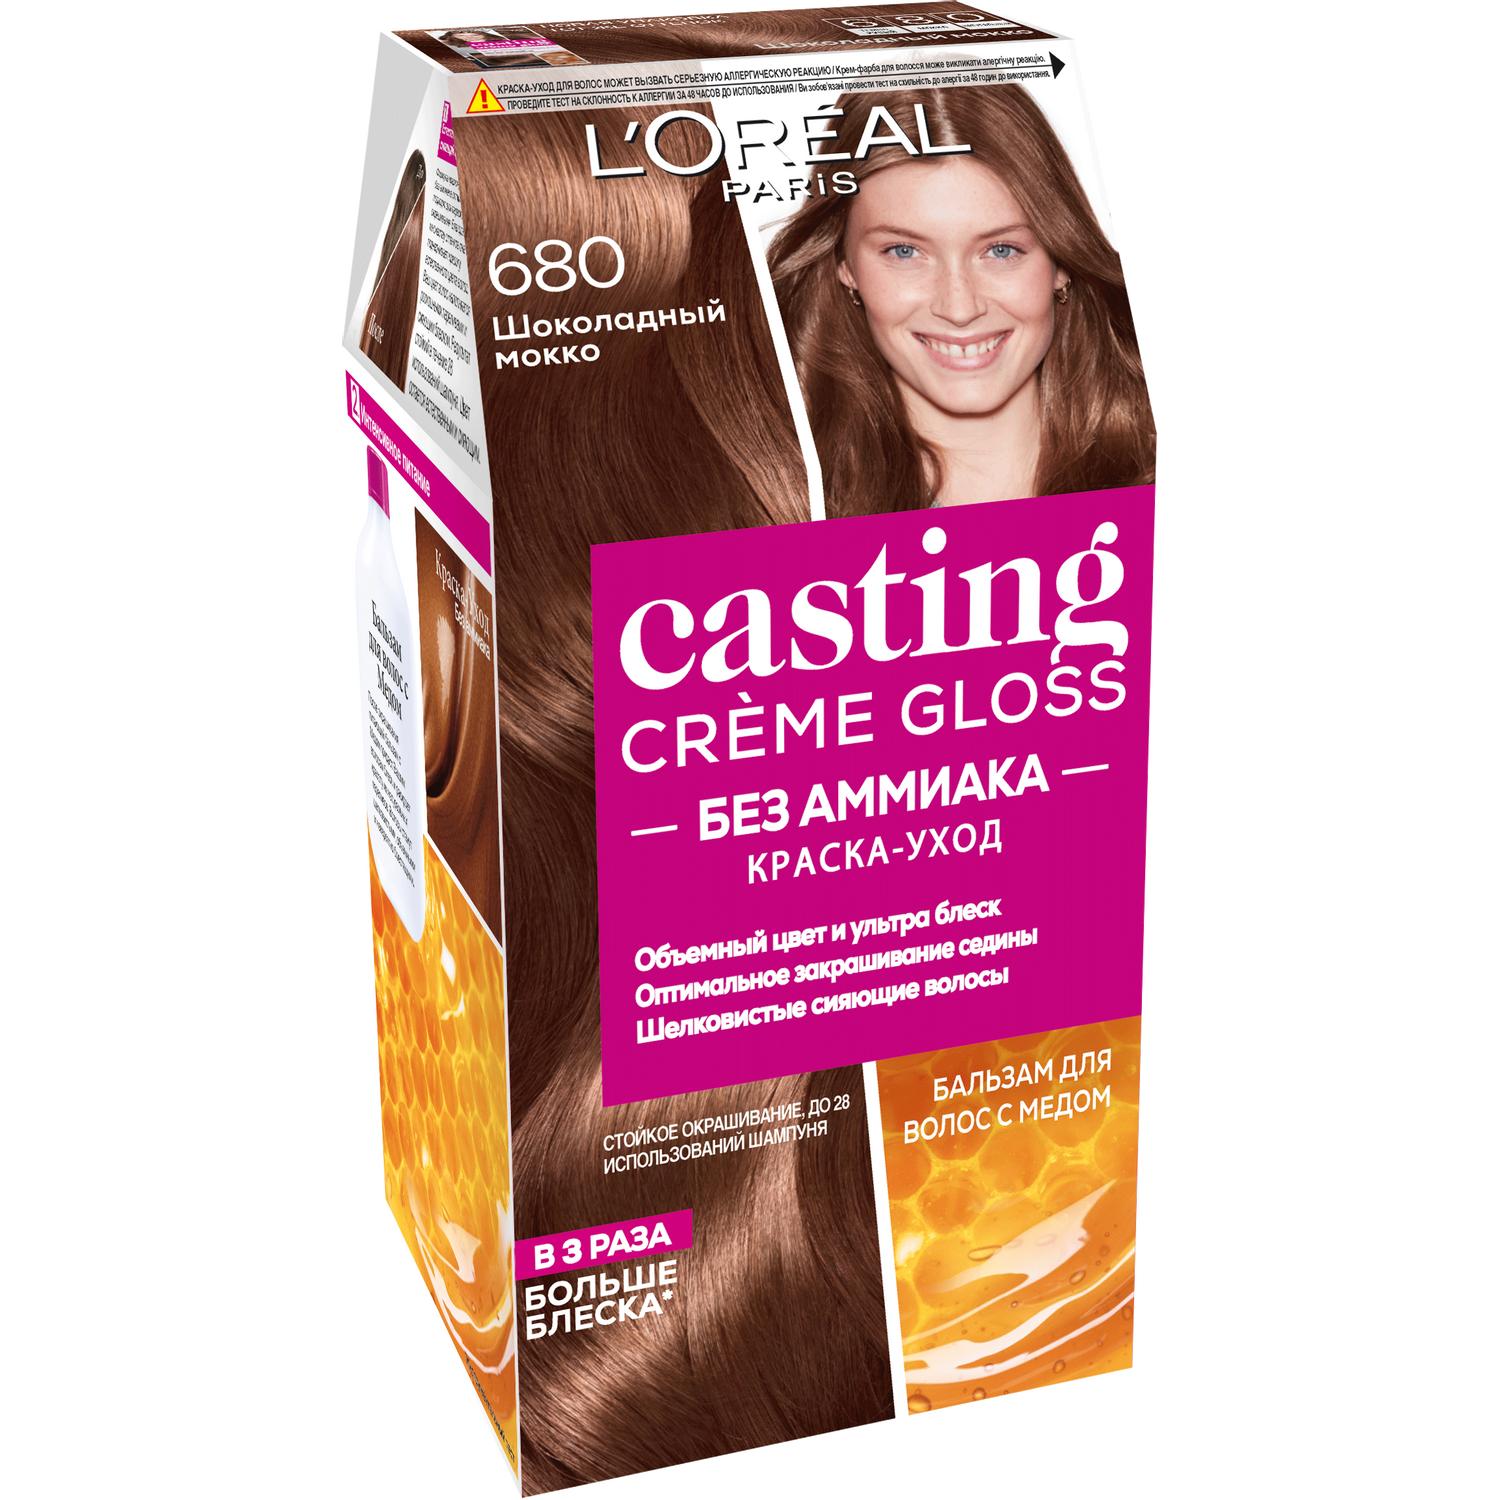 Краска для волос L'Oreal Paris Casting Creme Gloss 680 Шоколадный мокко краска l’oreal casting creme gloss 535 254 мл шоколад a3285100